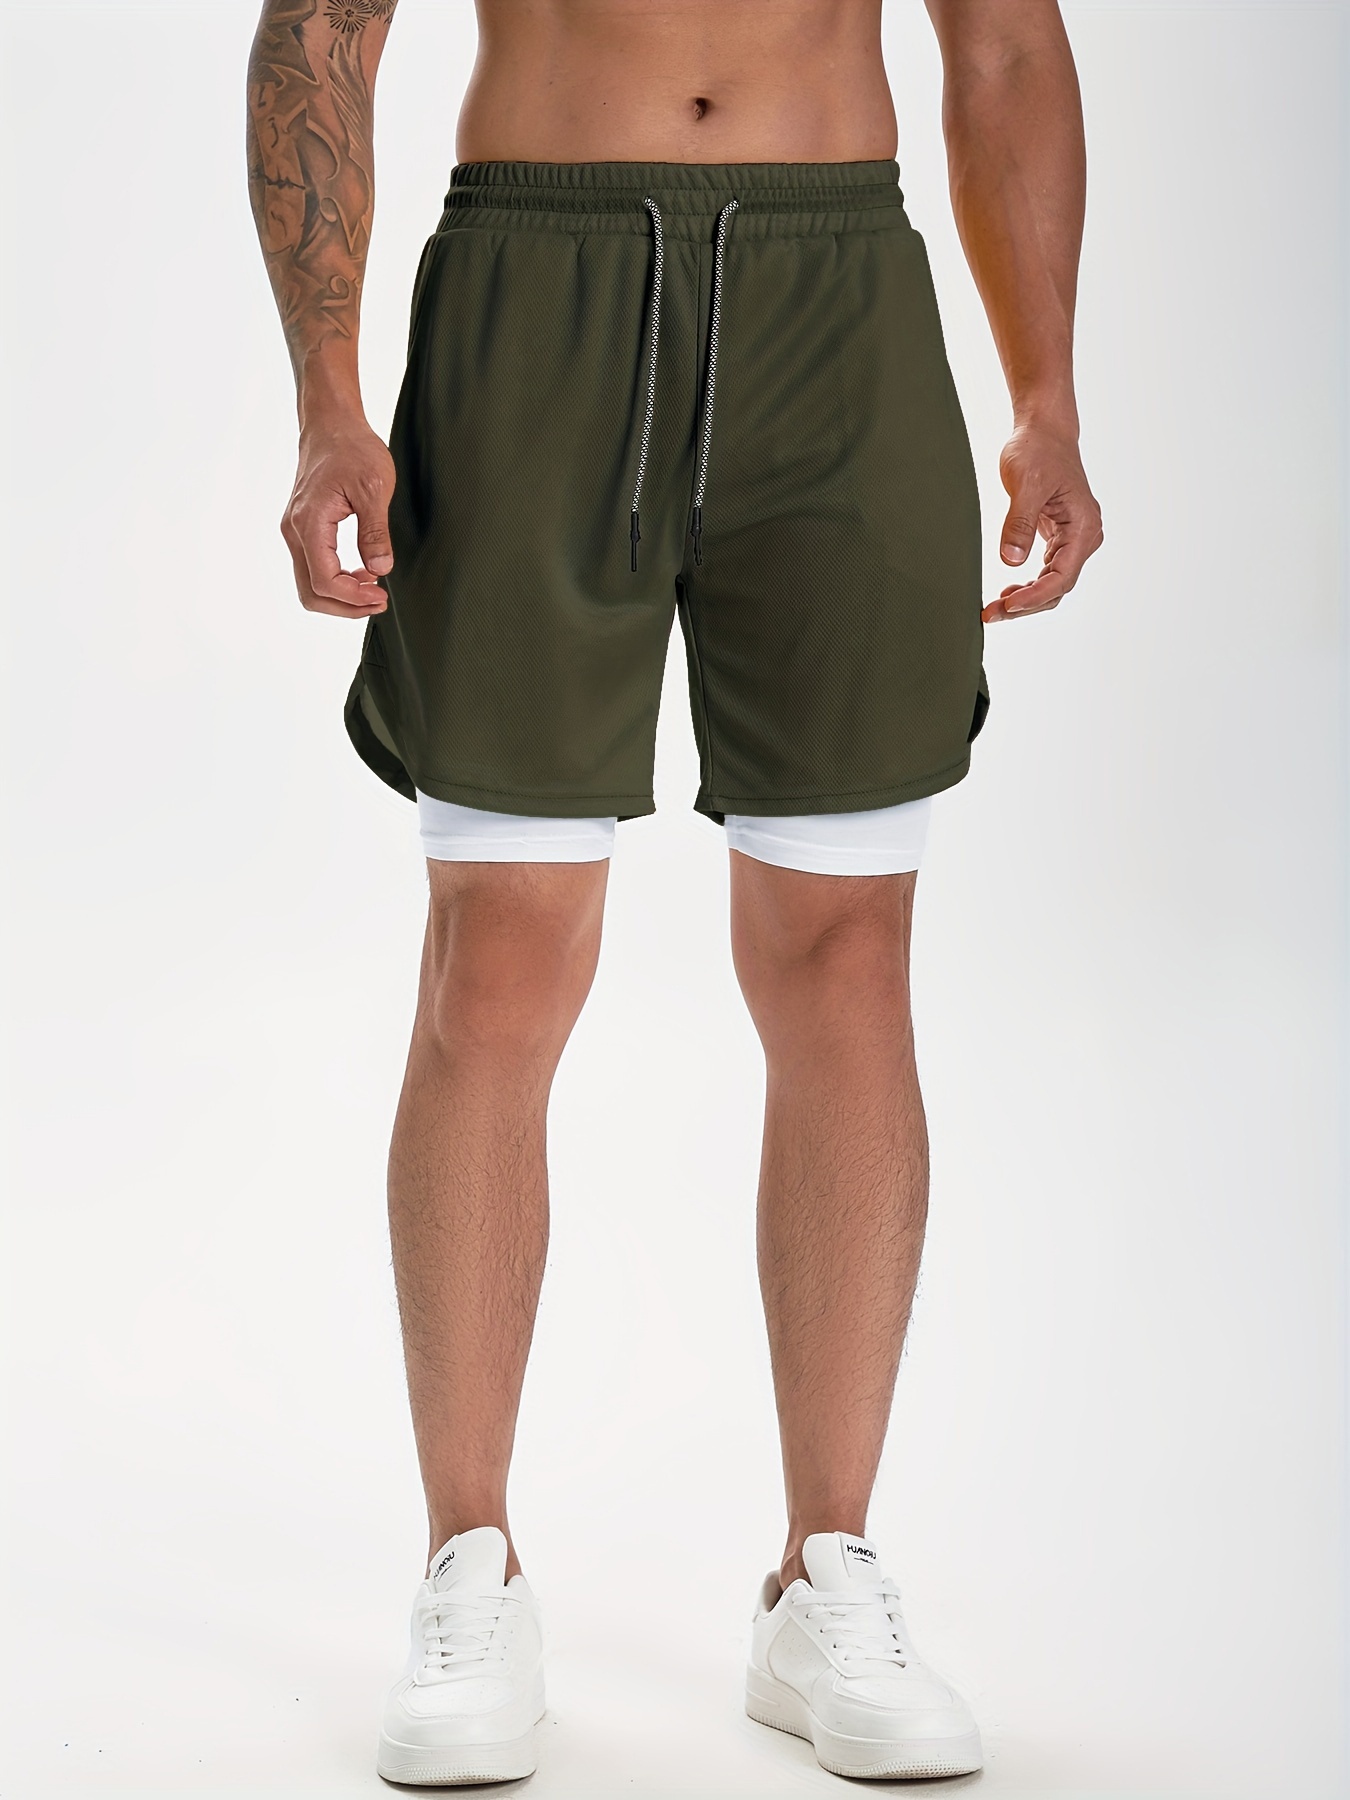 NIKE men's basketball compression shorts quick-drying sportwear shorts 101